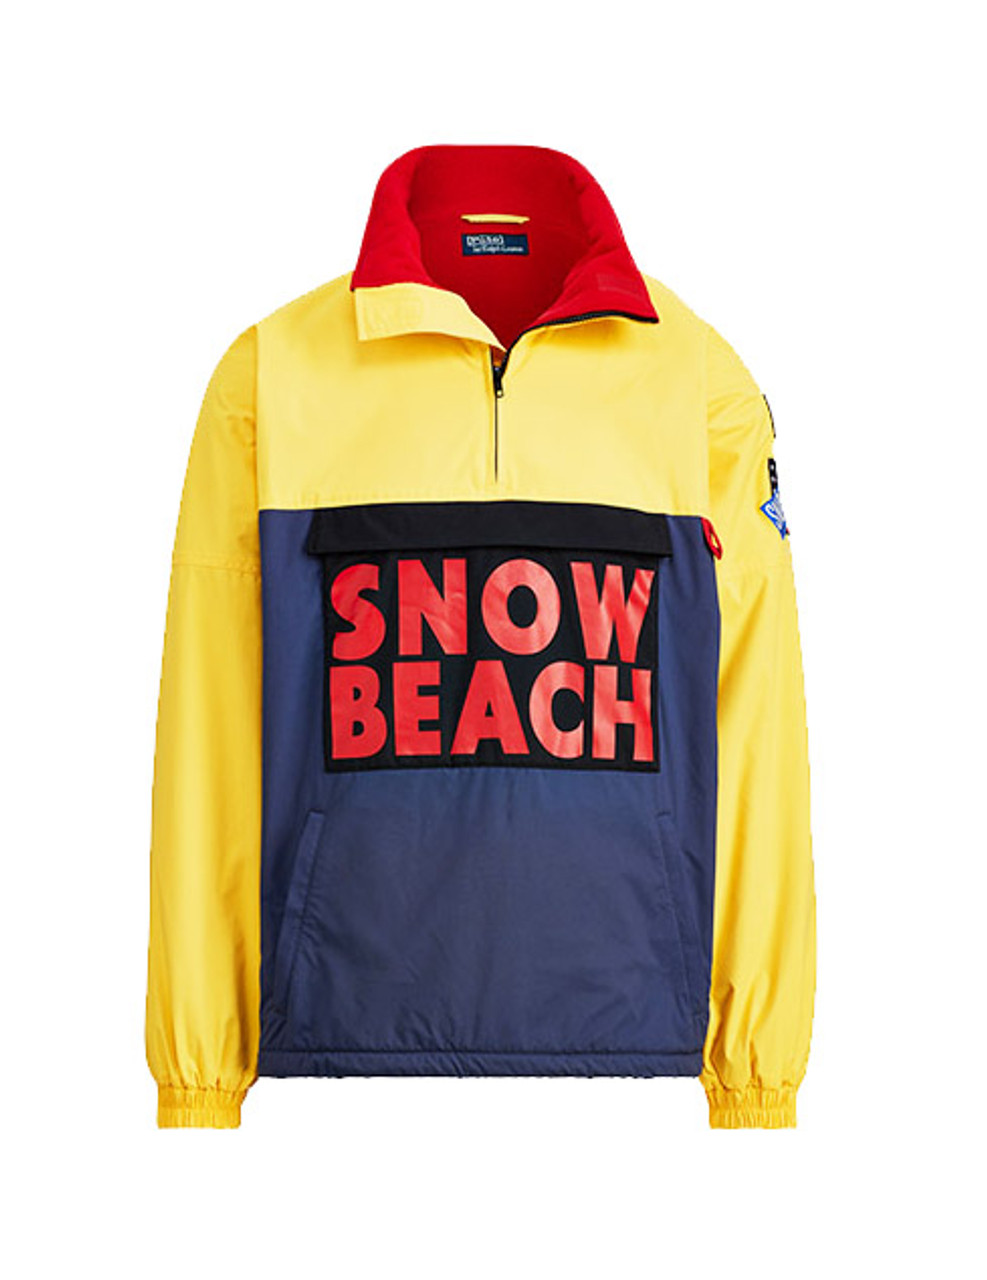 Snow Beach Ralph Lauren Cotton Jacket | CLJ